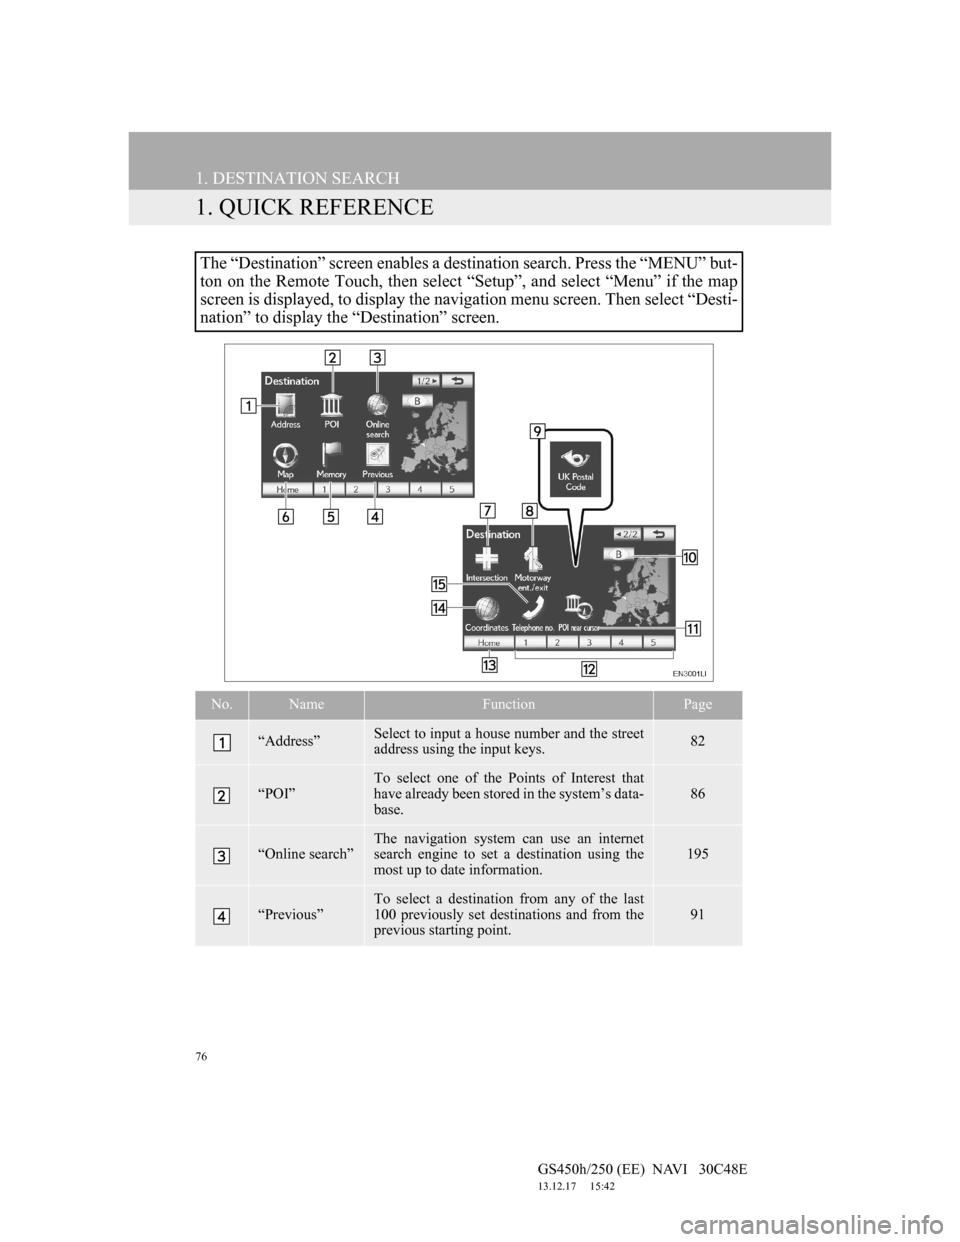 Lexus GS450h 2012  Navigation manual 76
GS450h/250 (EE)  NAVI   30C48E
13.12.17     15:42
1. DESTINATION SEARCH
1. QUICK REFERENCE
The “Destination” screen enables a destination search. Press the “MENU” but-
ton on the Remote Tou